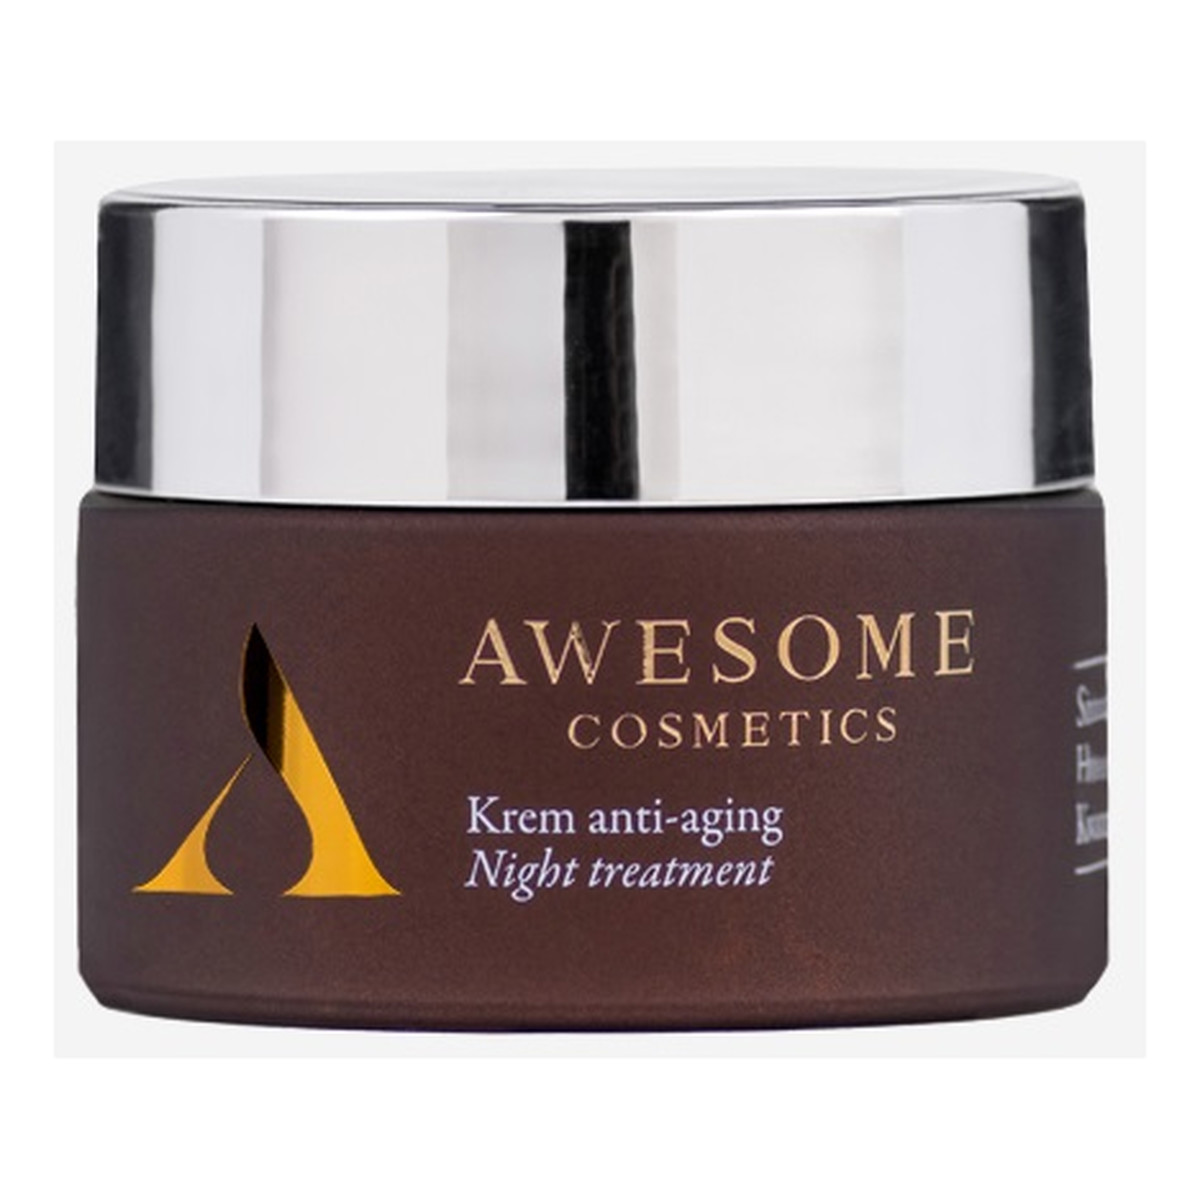 Awesome Cosmetics Krem anti-aging na noc night treatment 50ml